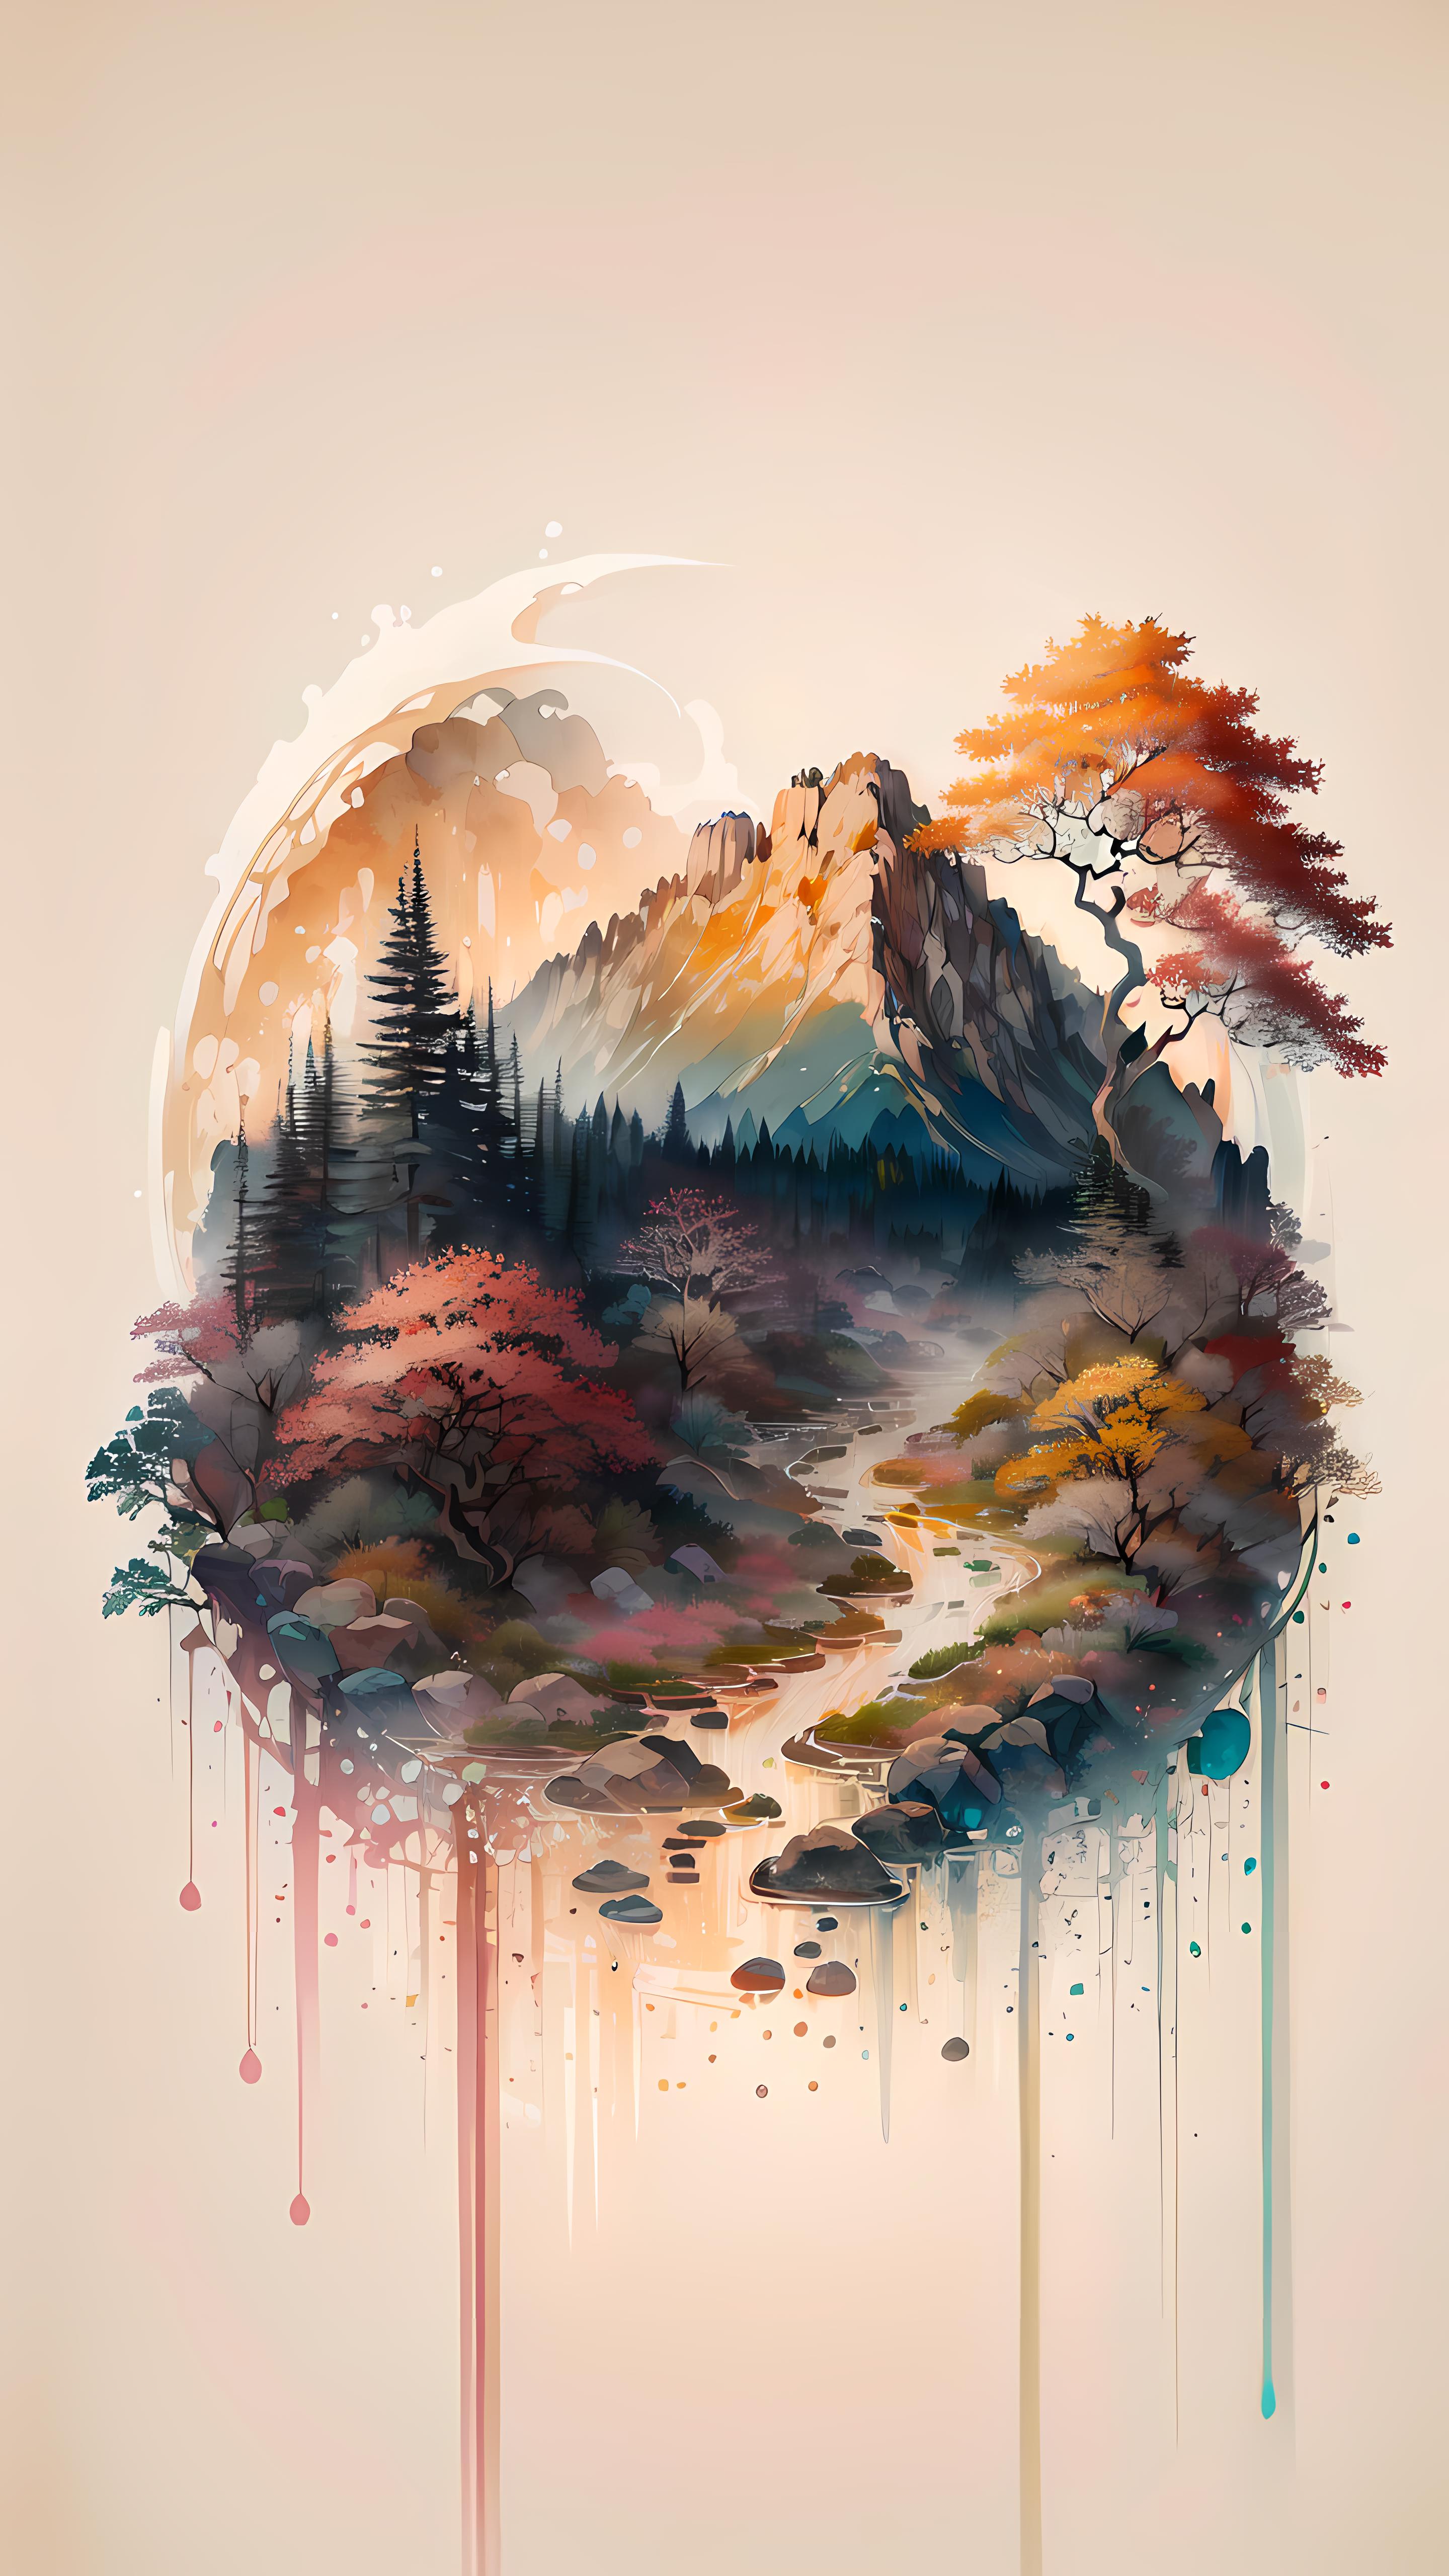 Ink scenery | 水墨山水 image by NoWayG5